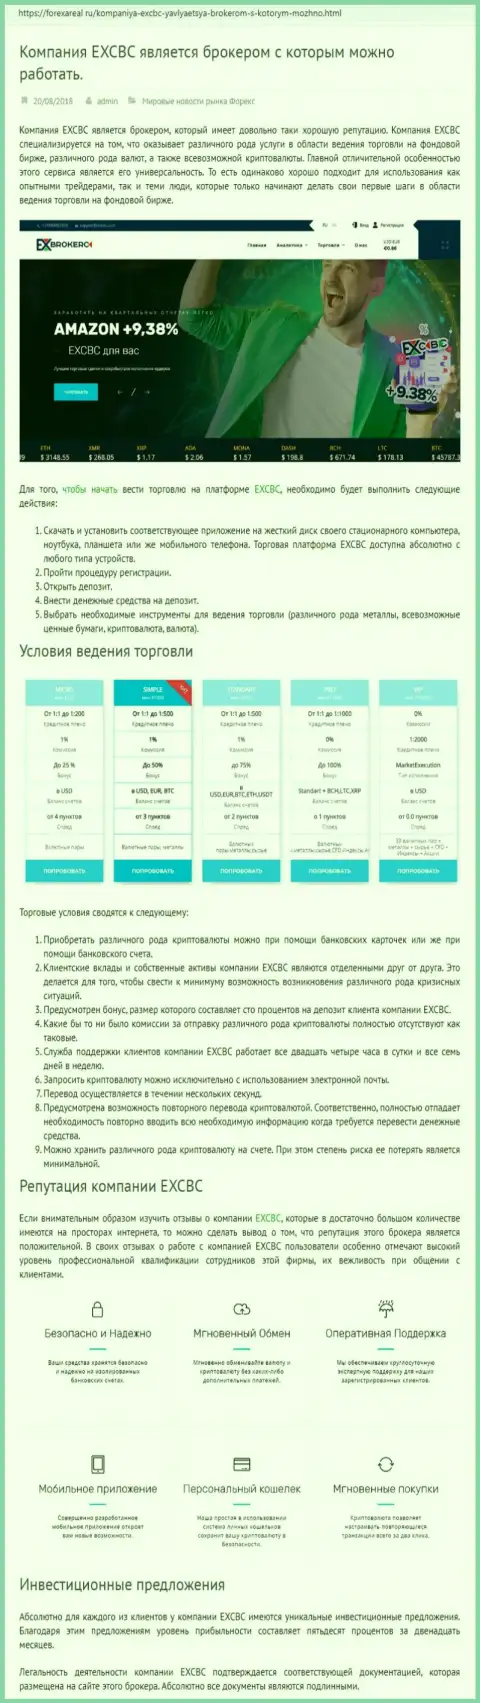 Web-ресурс forexAreal Ru предоставил разбор FOREX дилинговой организации ЕИксКБК Ком